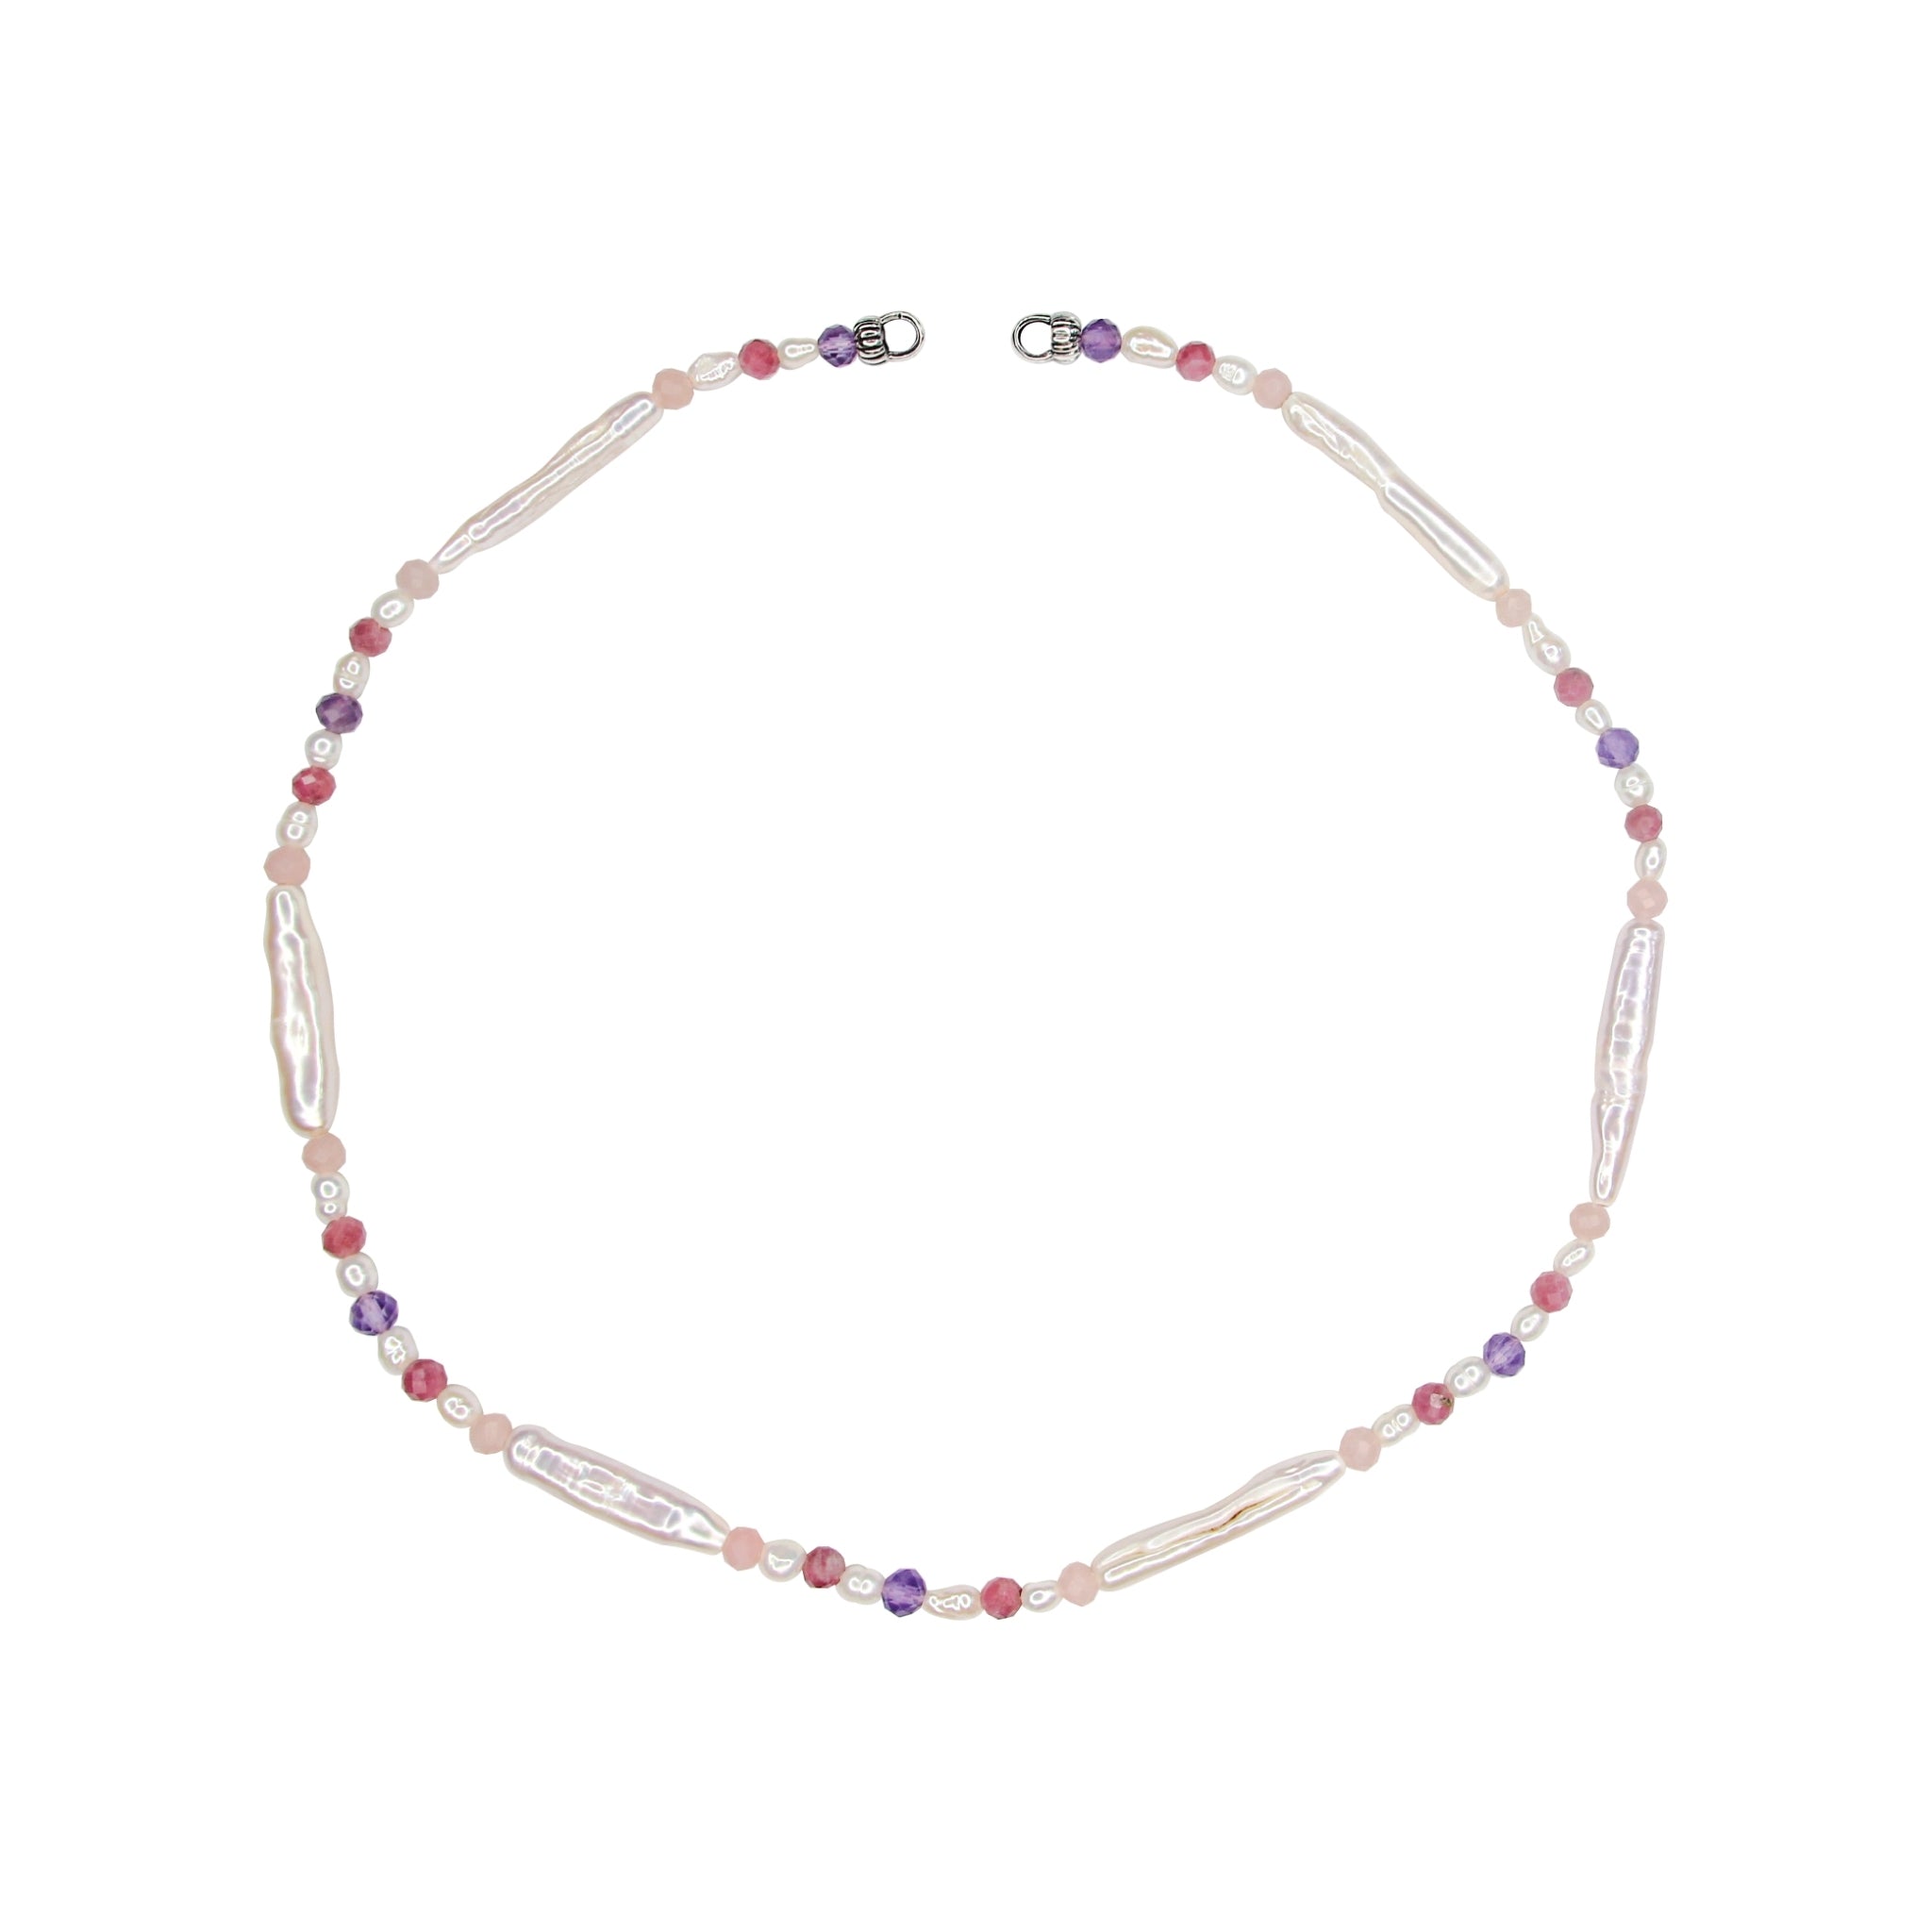 Mixed Pink Tourmaline Stone Necklace